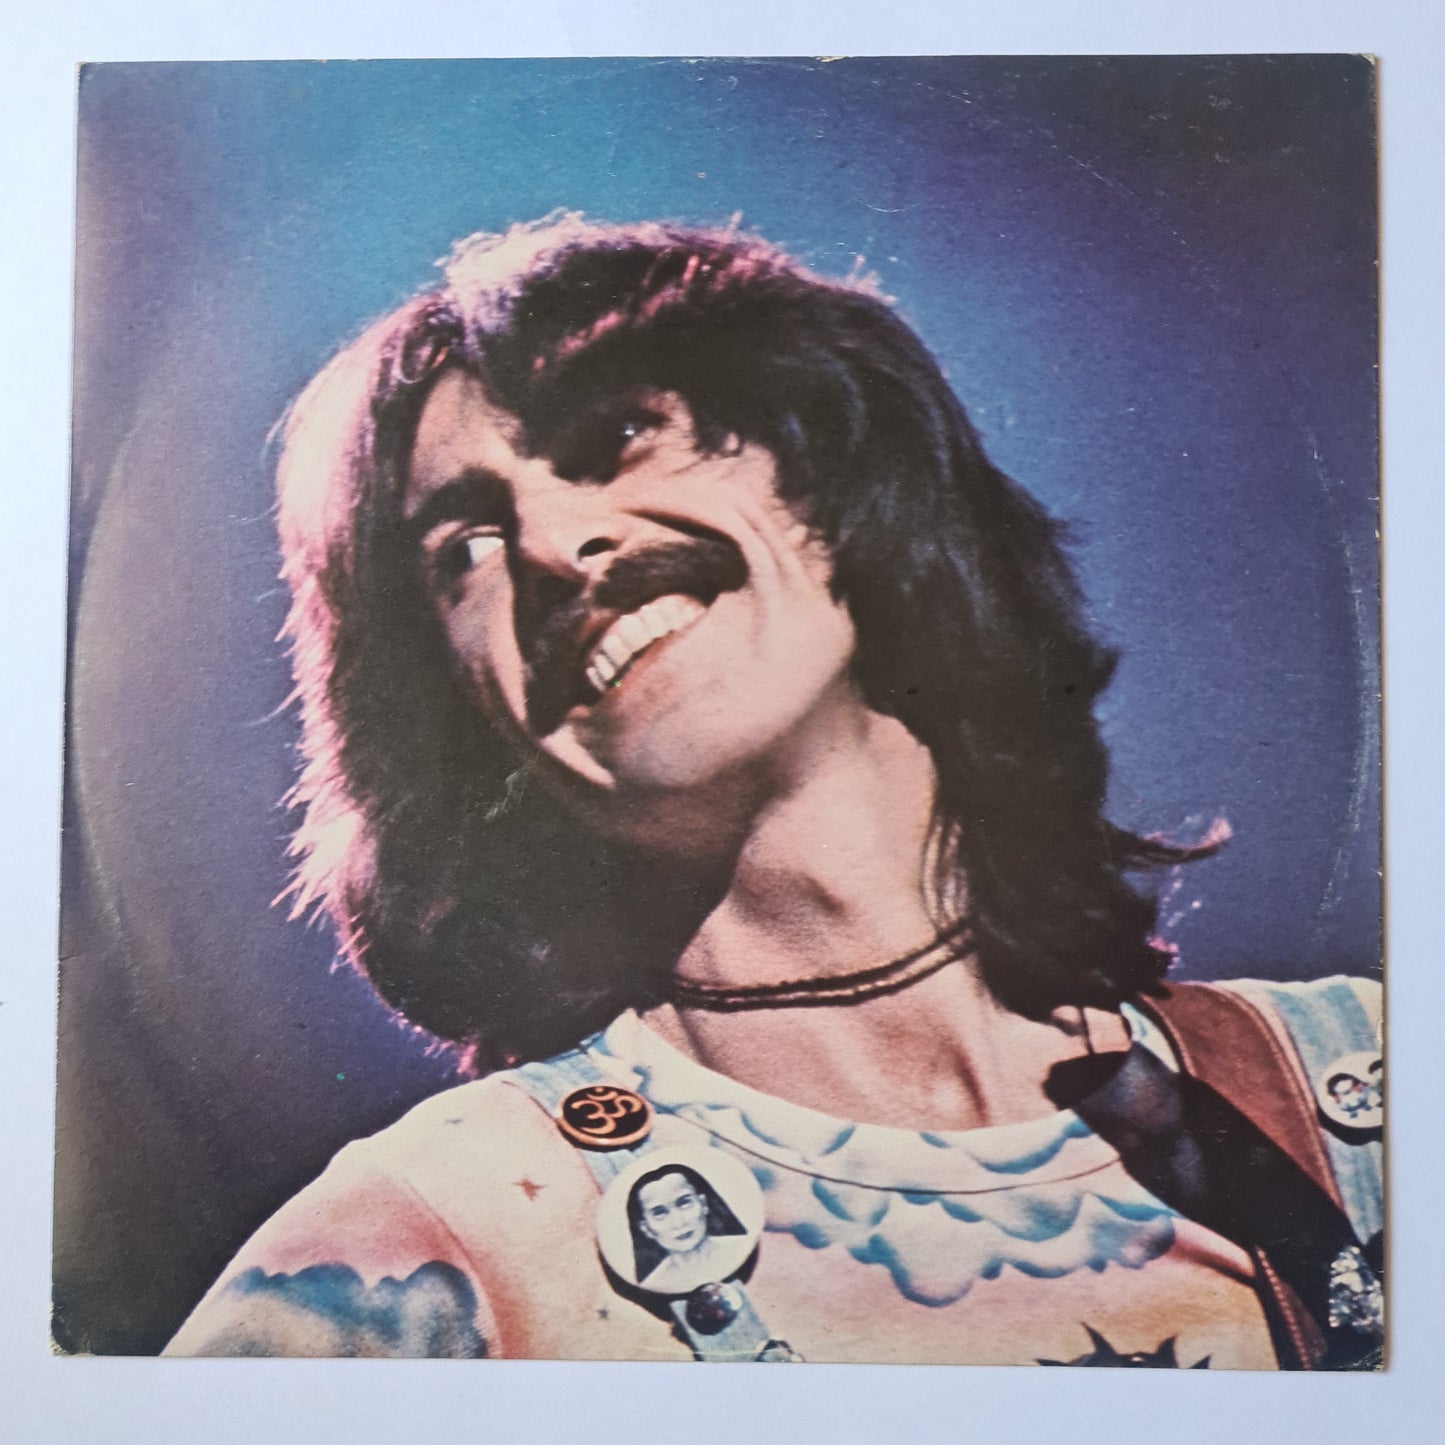 George Harrison – Extra Texture - 1975 - Vinyl Record